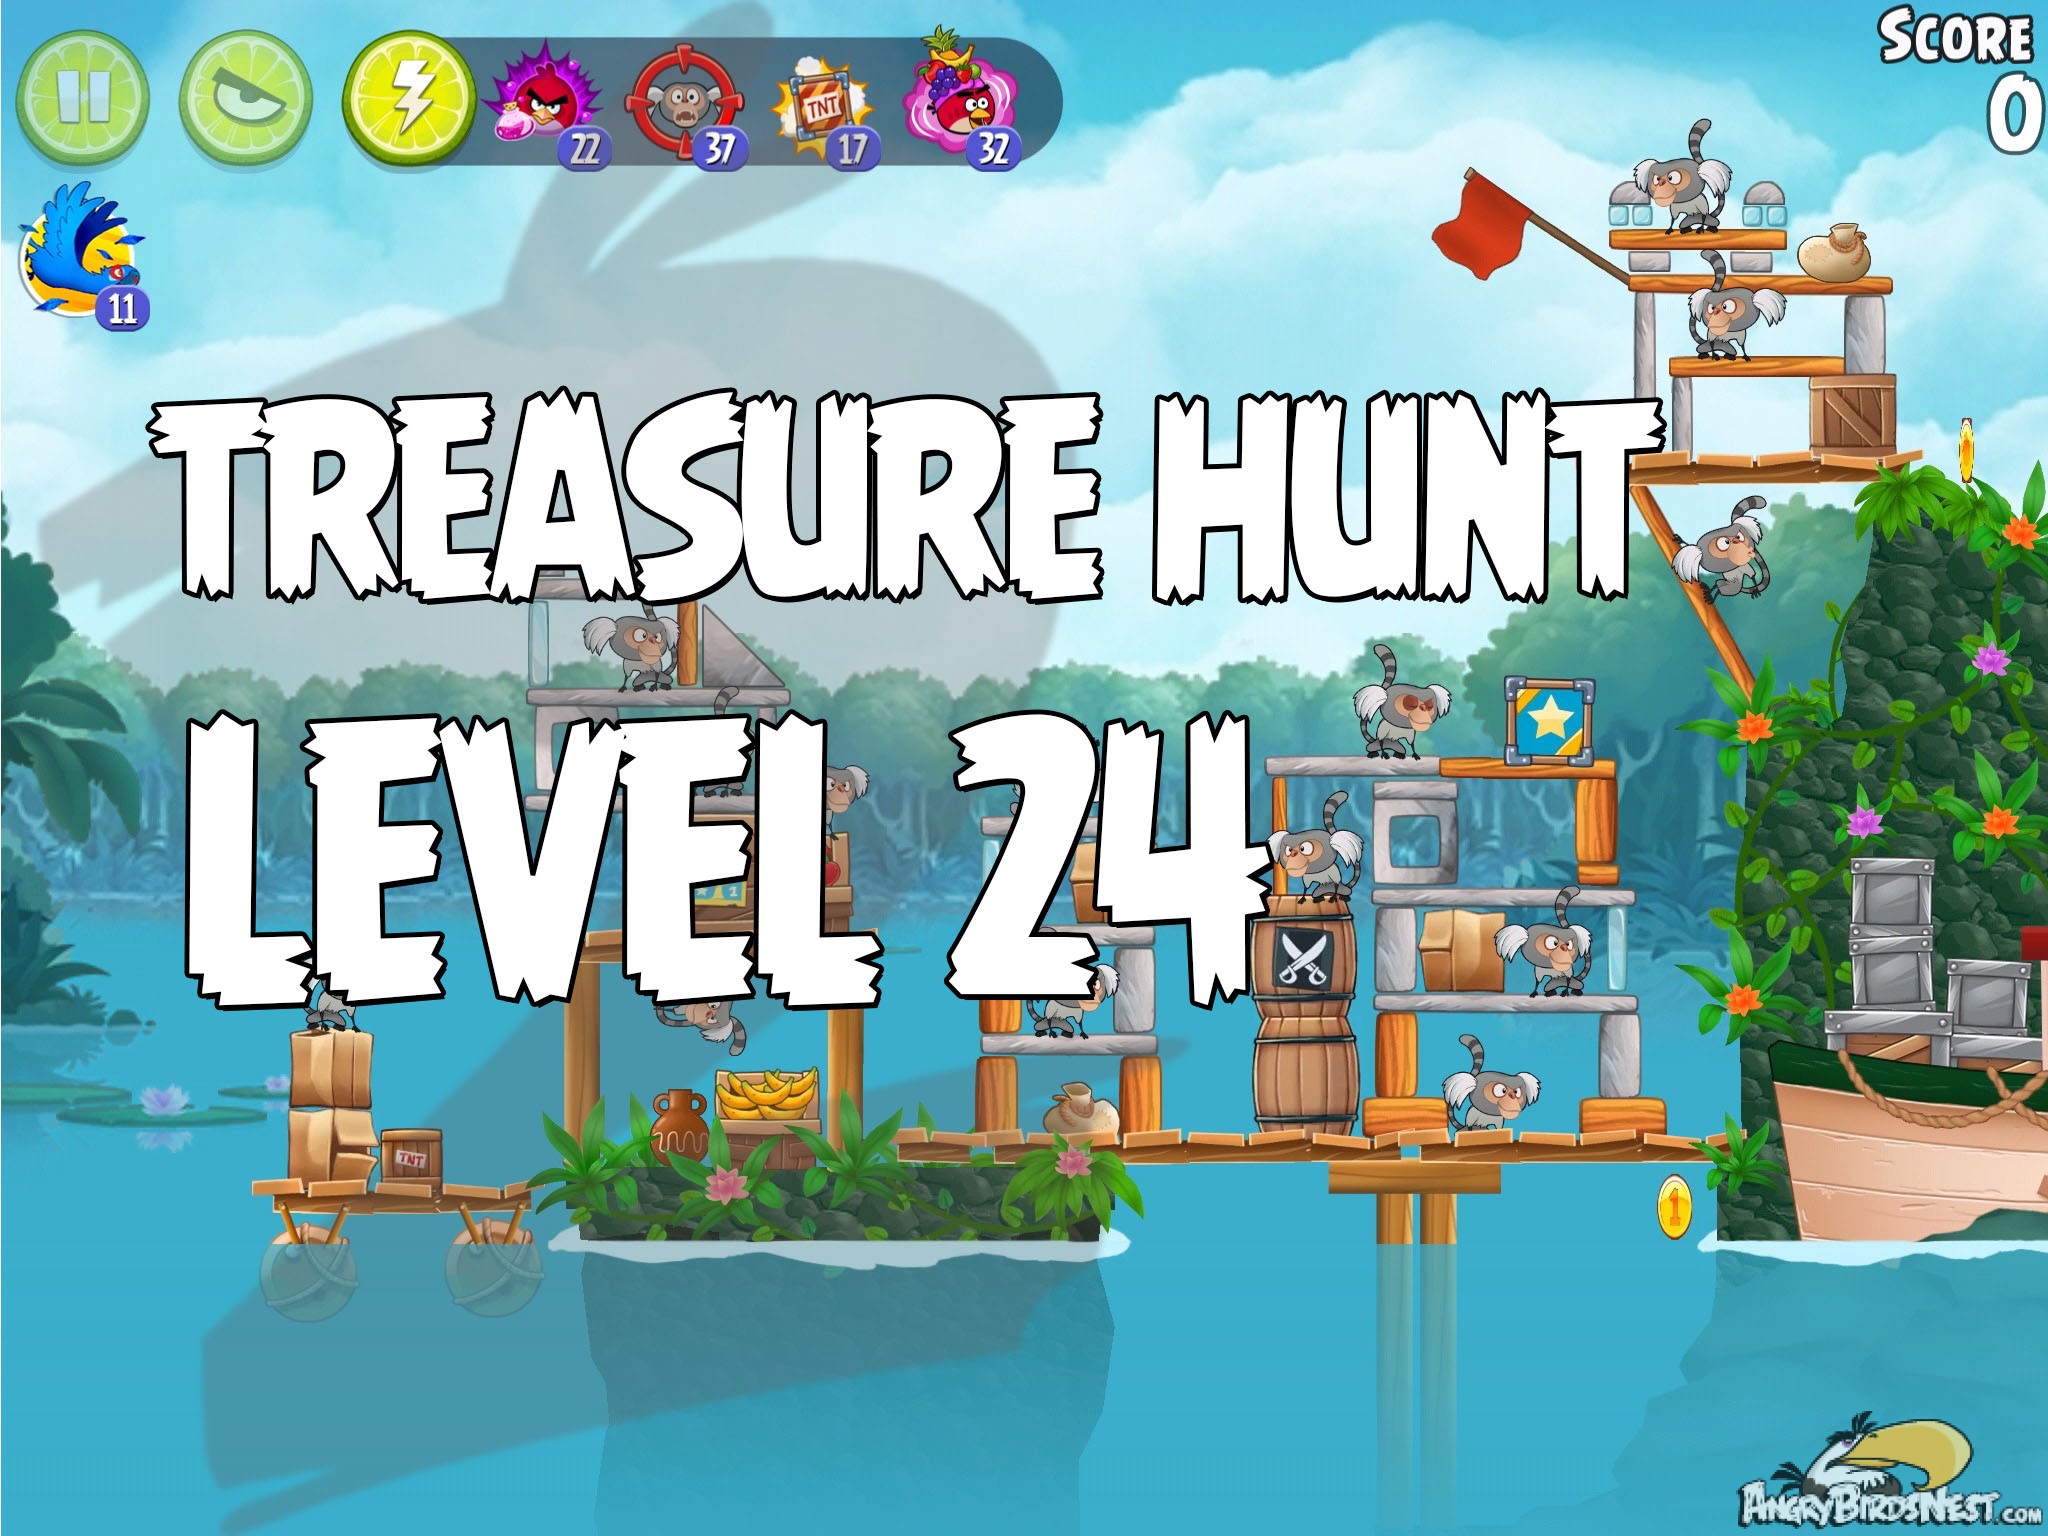 Angry Birds Rio Treasure hunt Level 24